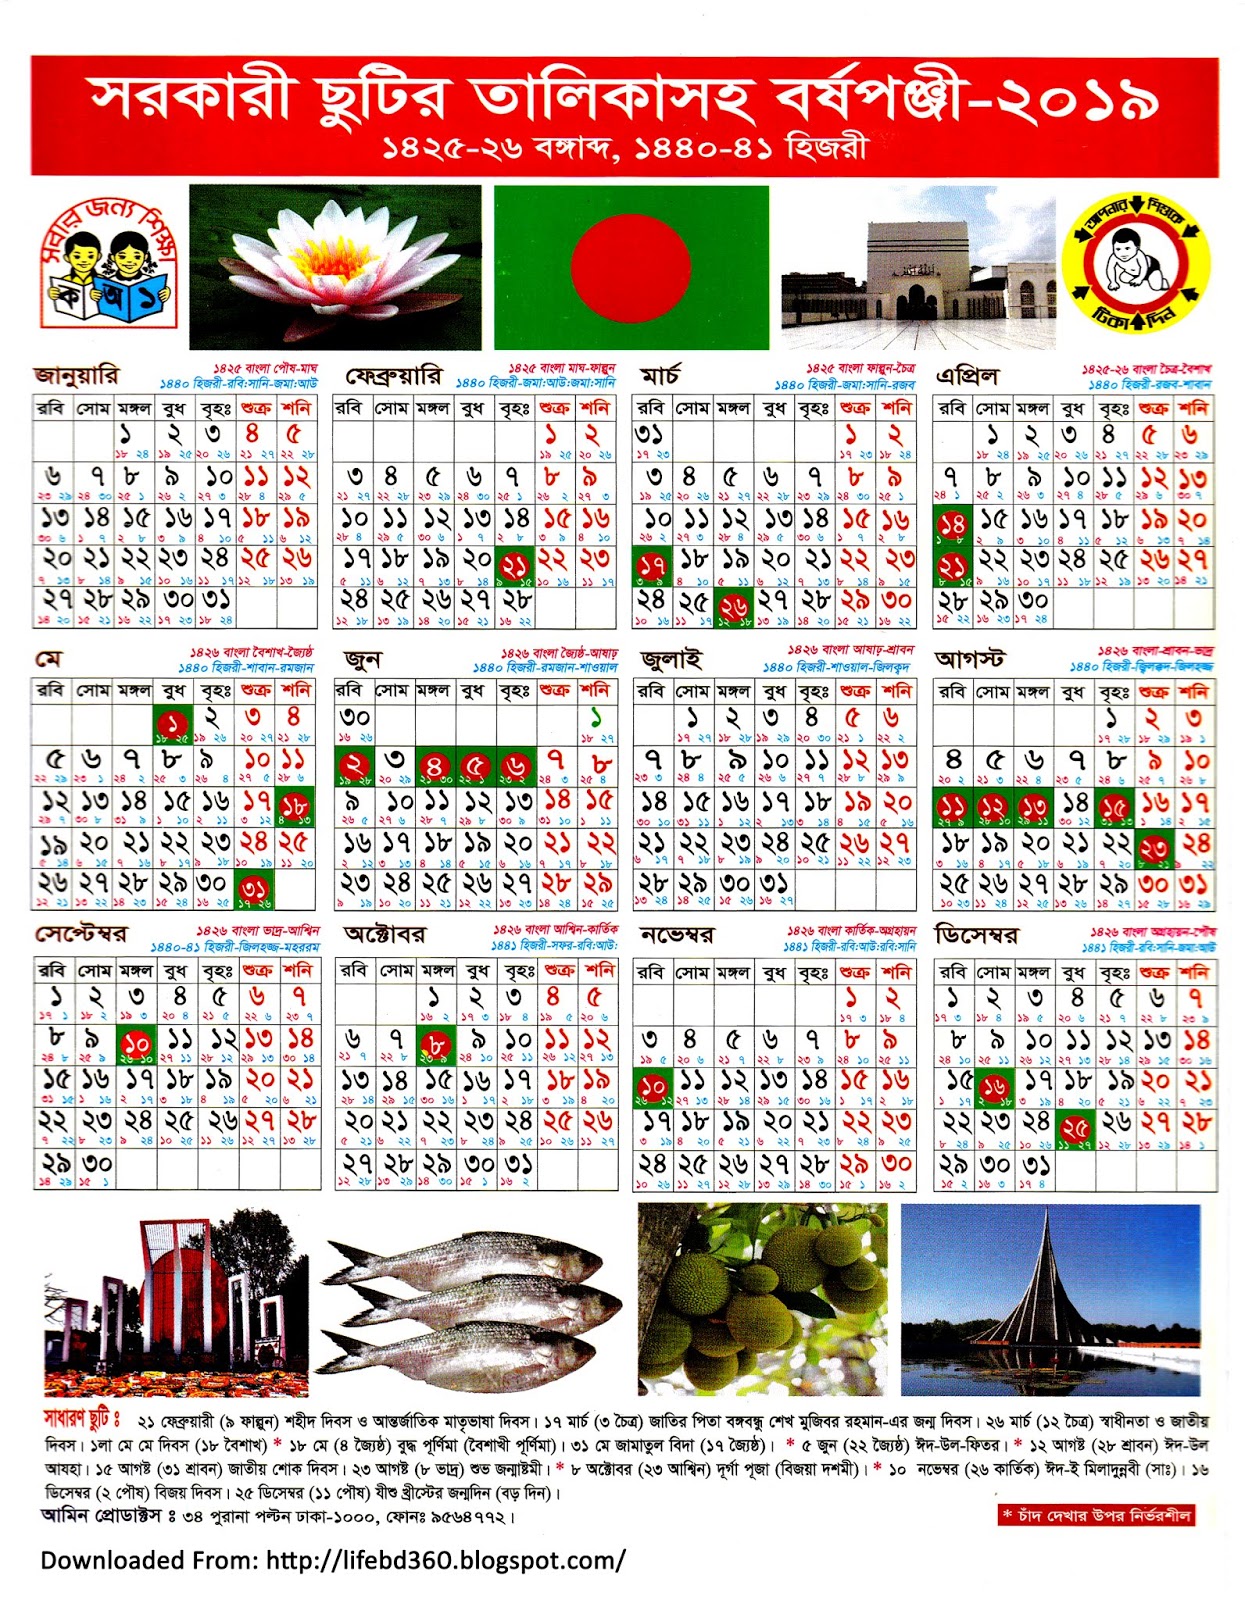 bengali-calendar-2022-pdf-download